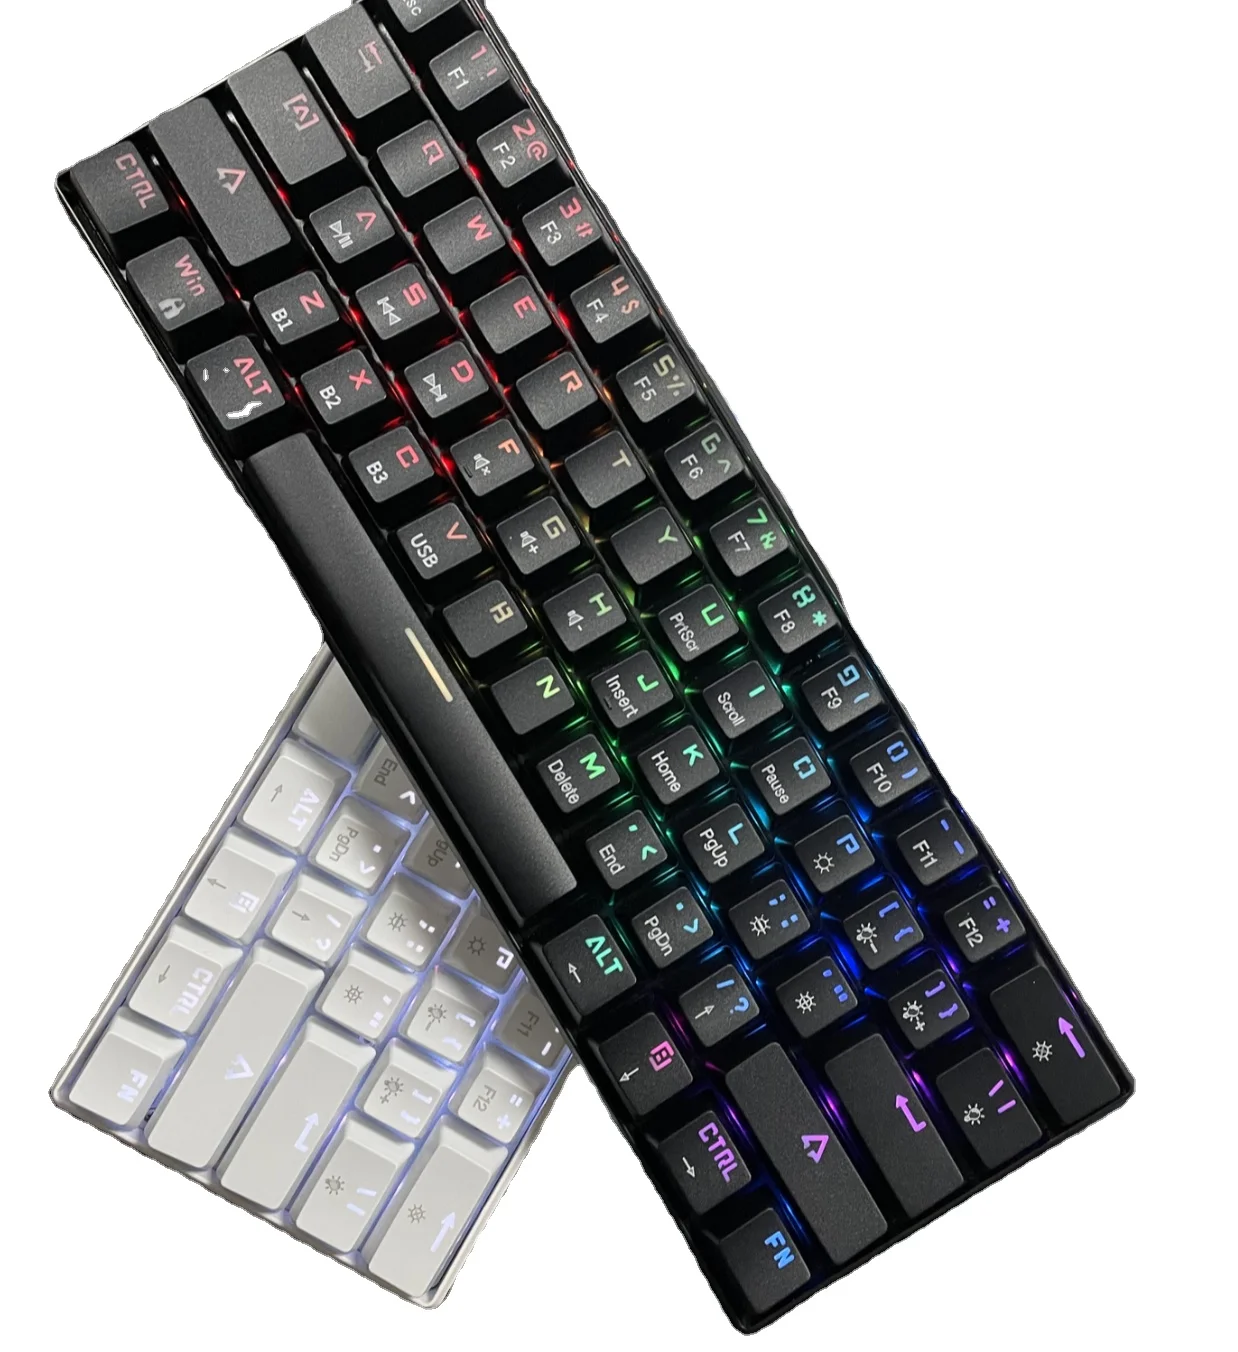 

GK61 RGB Mechanical Gaming Keyboard Illuminated LED Backlit 61 Keys Programmable For PC/Mac/Win Mechanical Gaming Keyboard, Black white